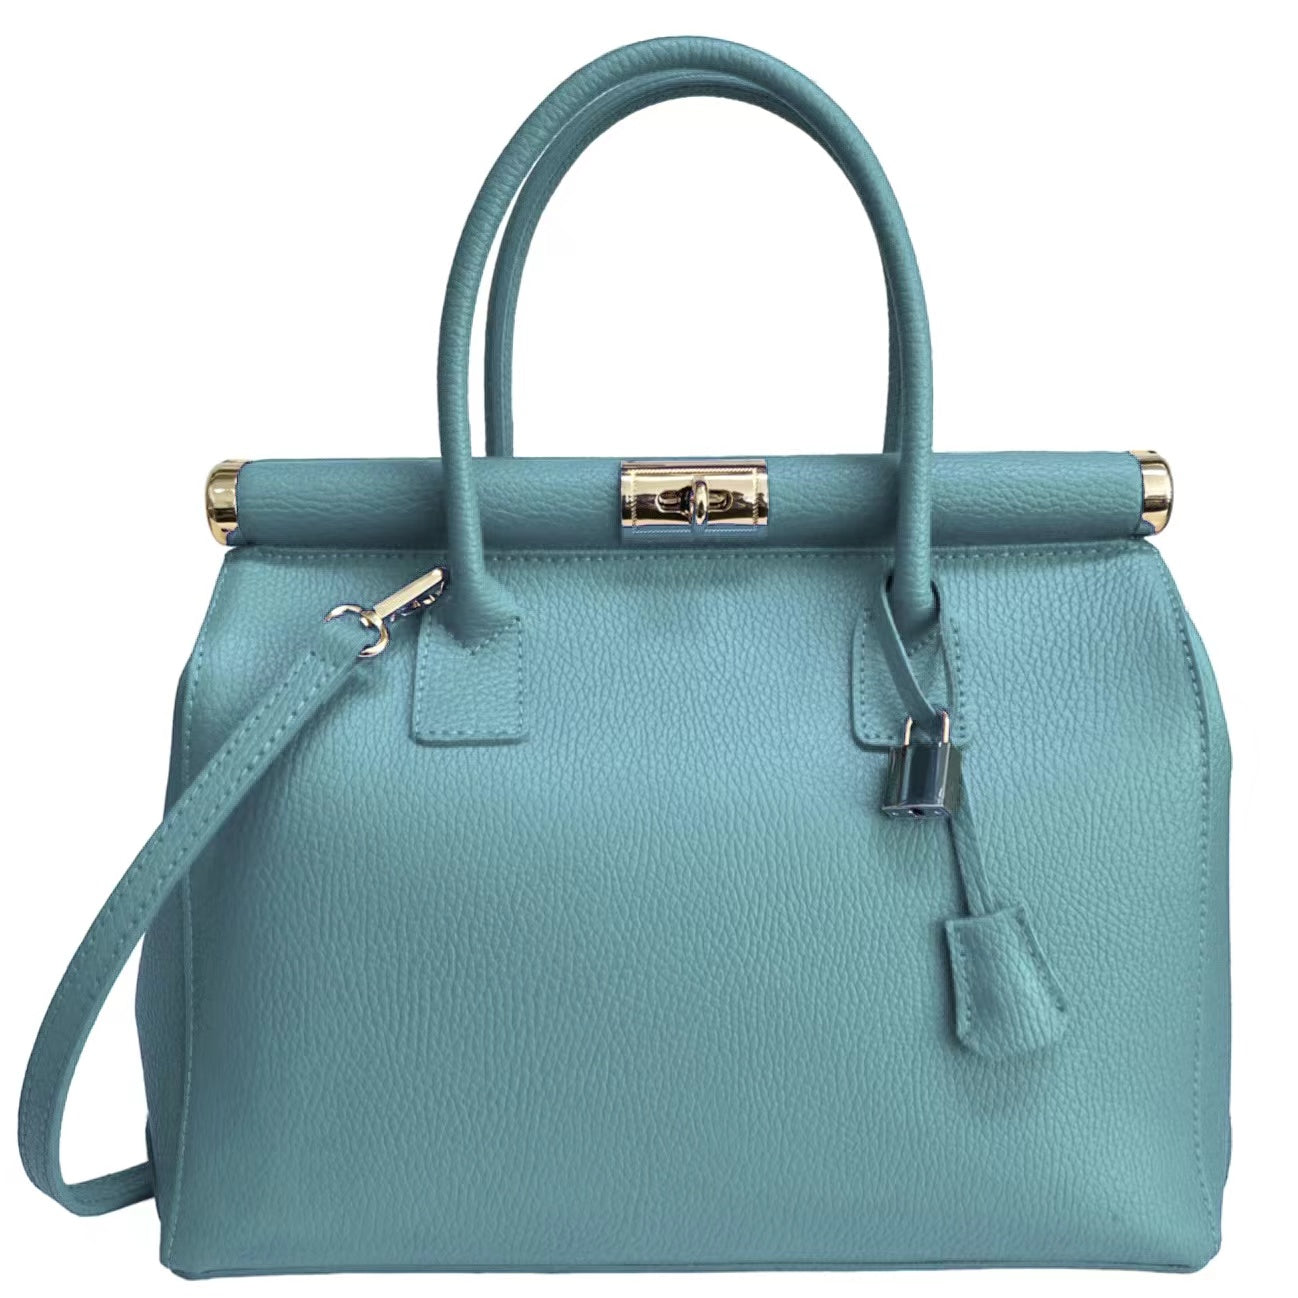 Modarno Handbag Woman Leather Handbag with Shoulder Strap 35x28x16 cm